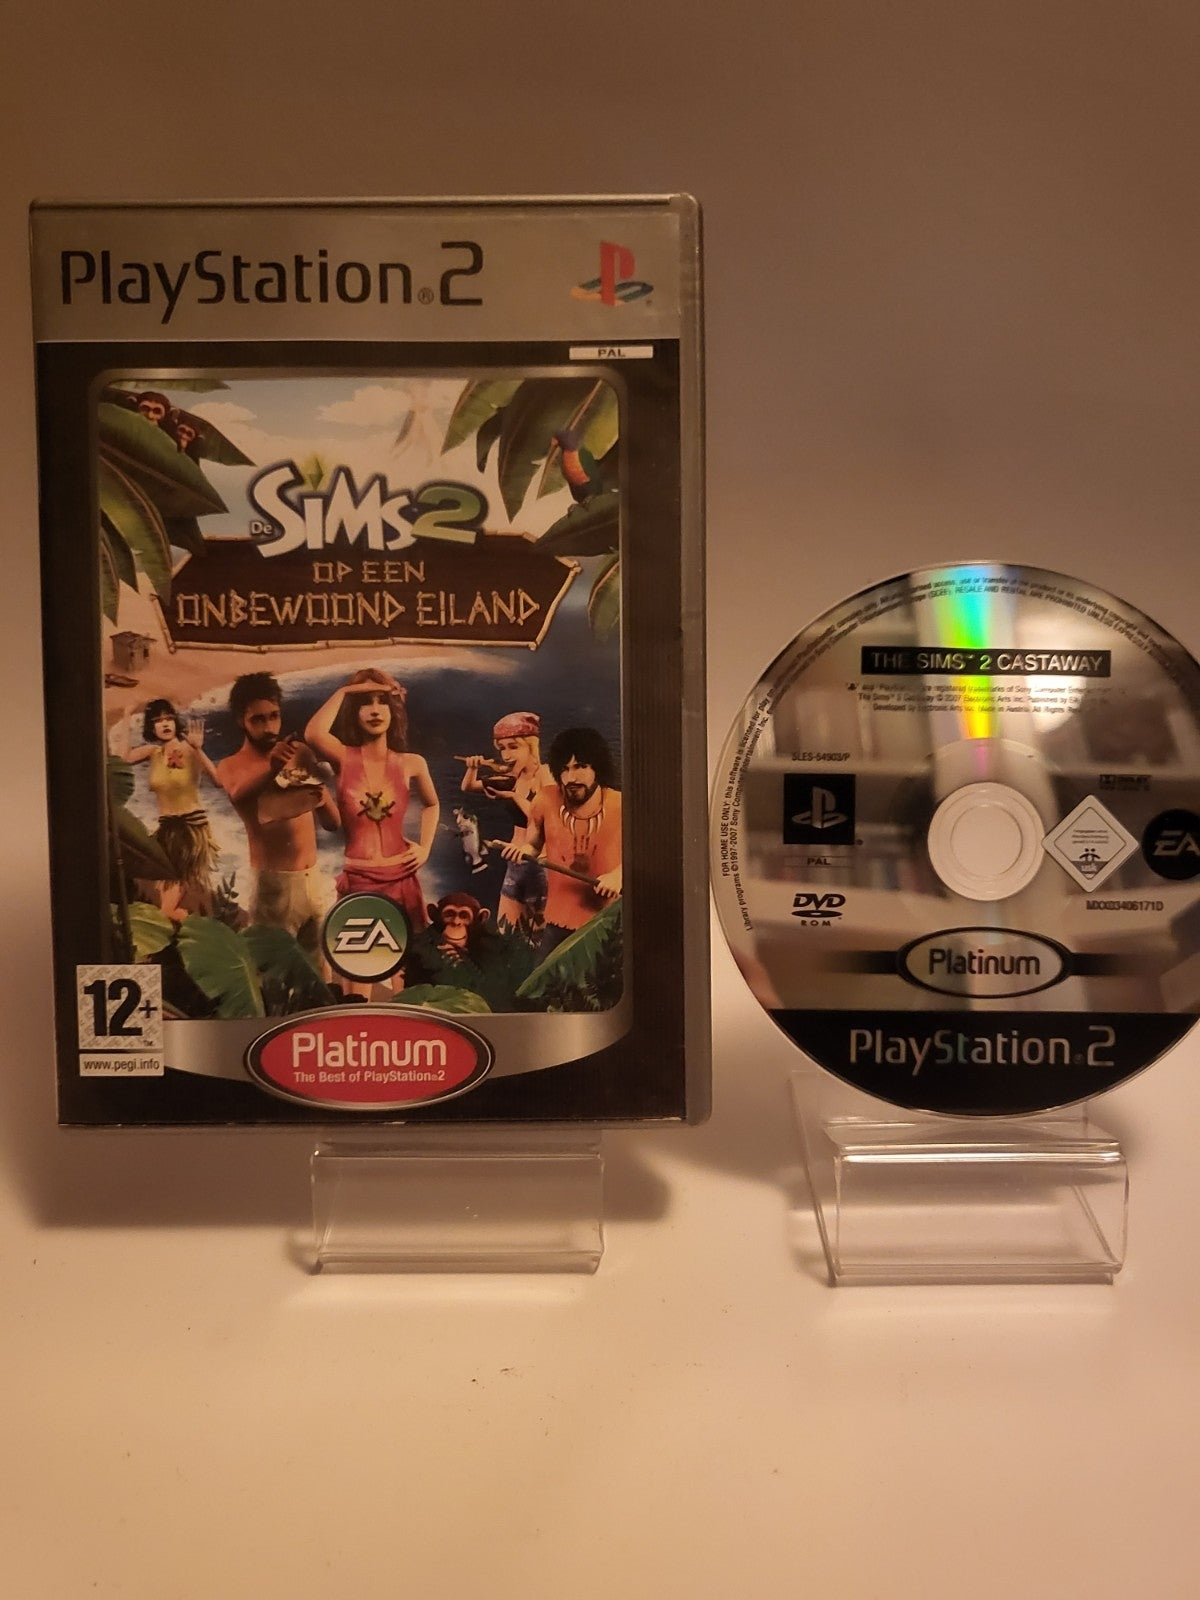 Sims 2 op een Onbewoond Eiland Platinum Edition Playstation 2